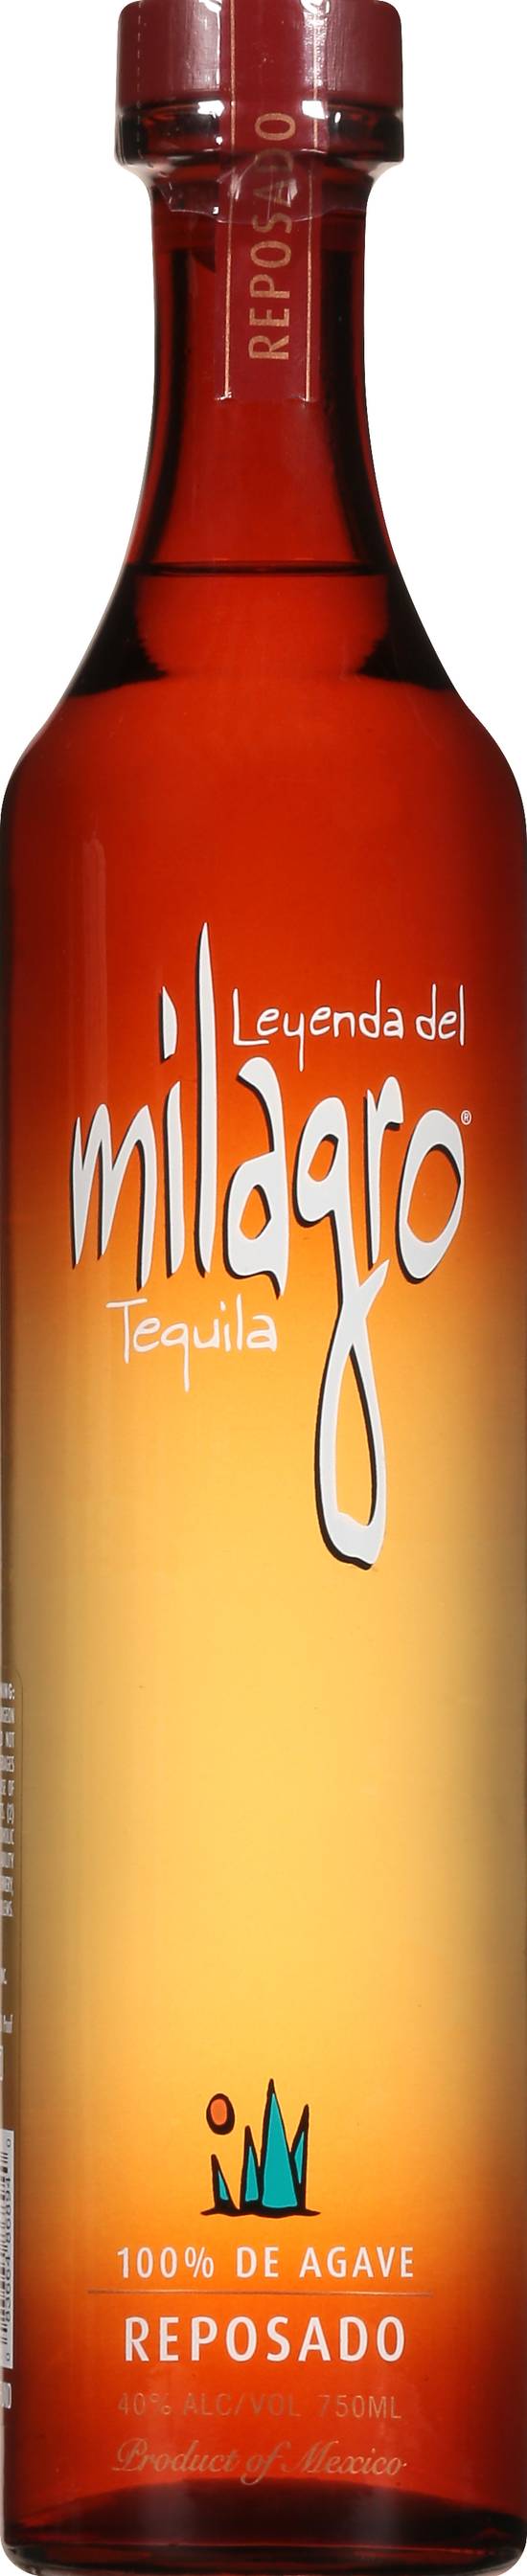 Milagro Mexican Reposado Tequila (750 ml)